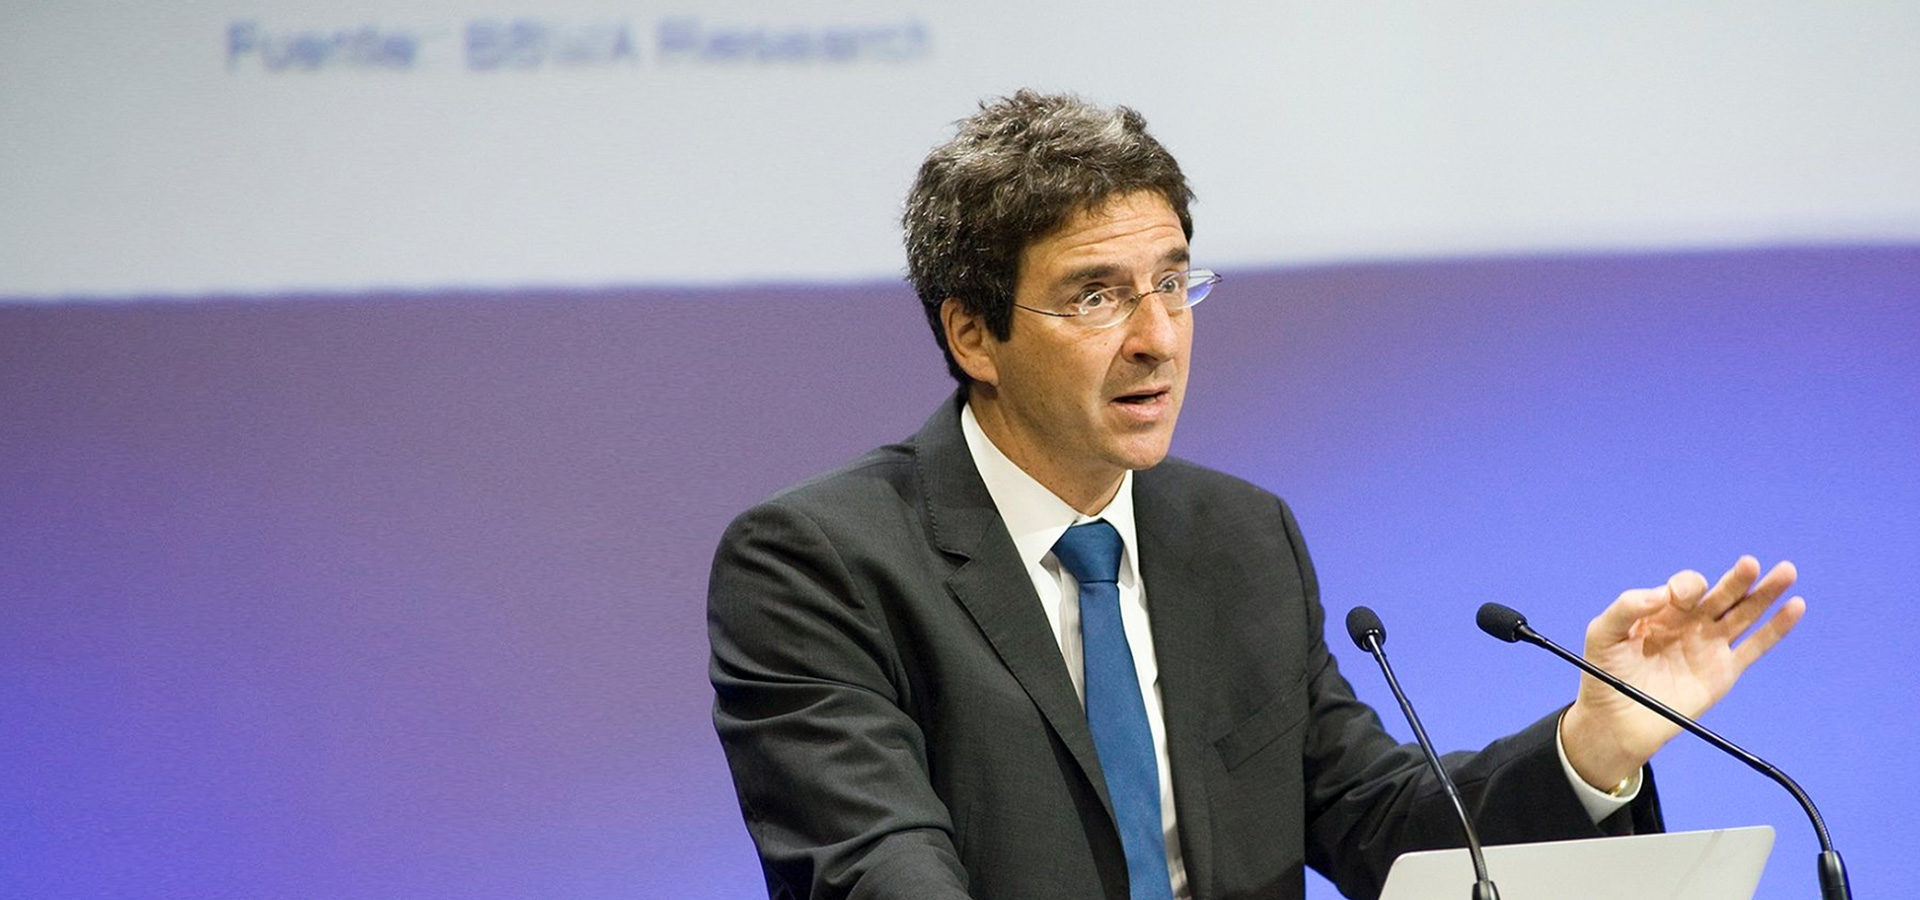 Jorge Sicilia Spain economic outlook presentation